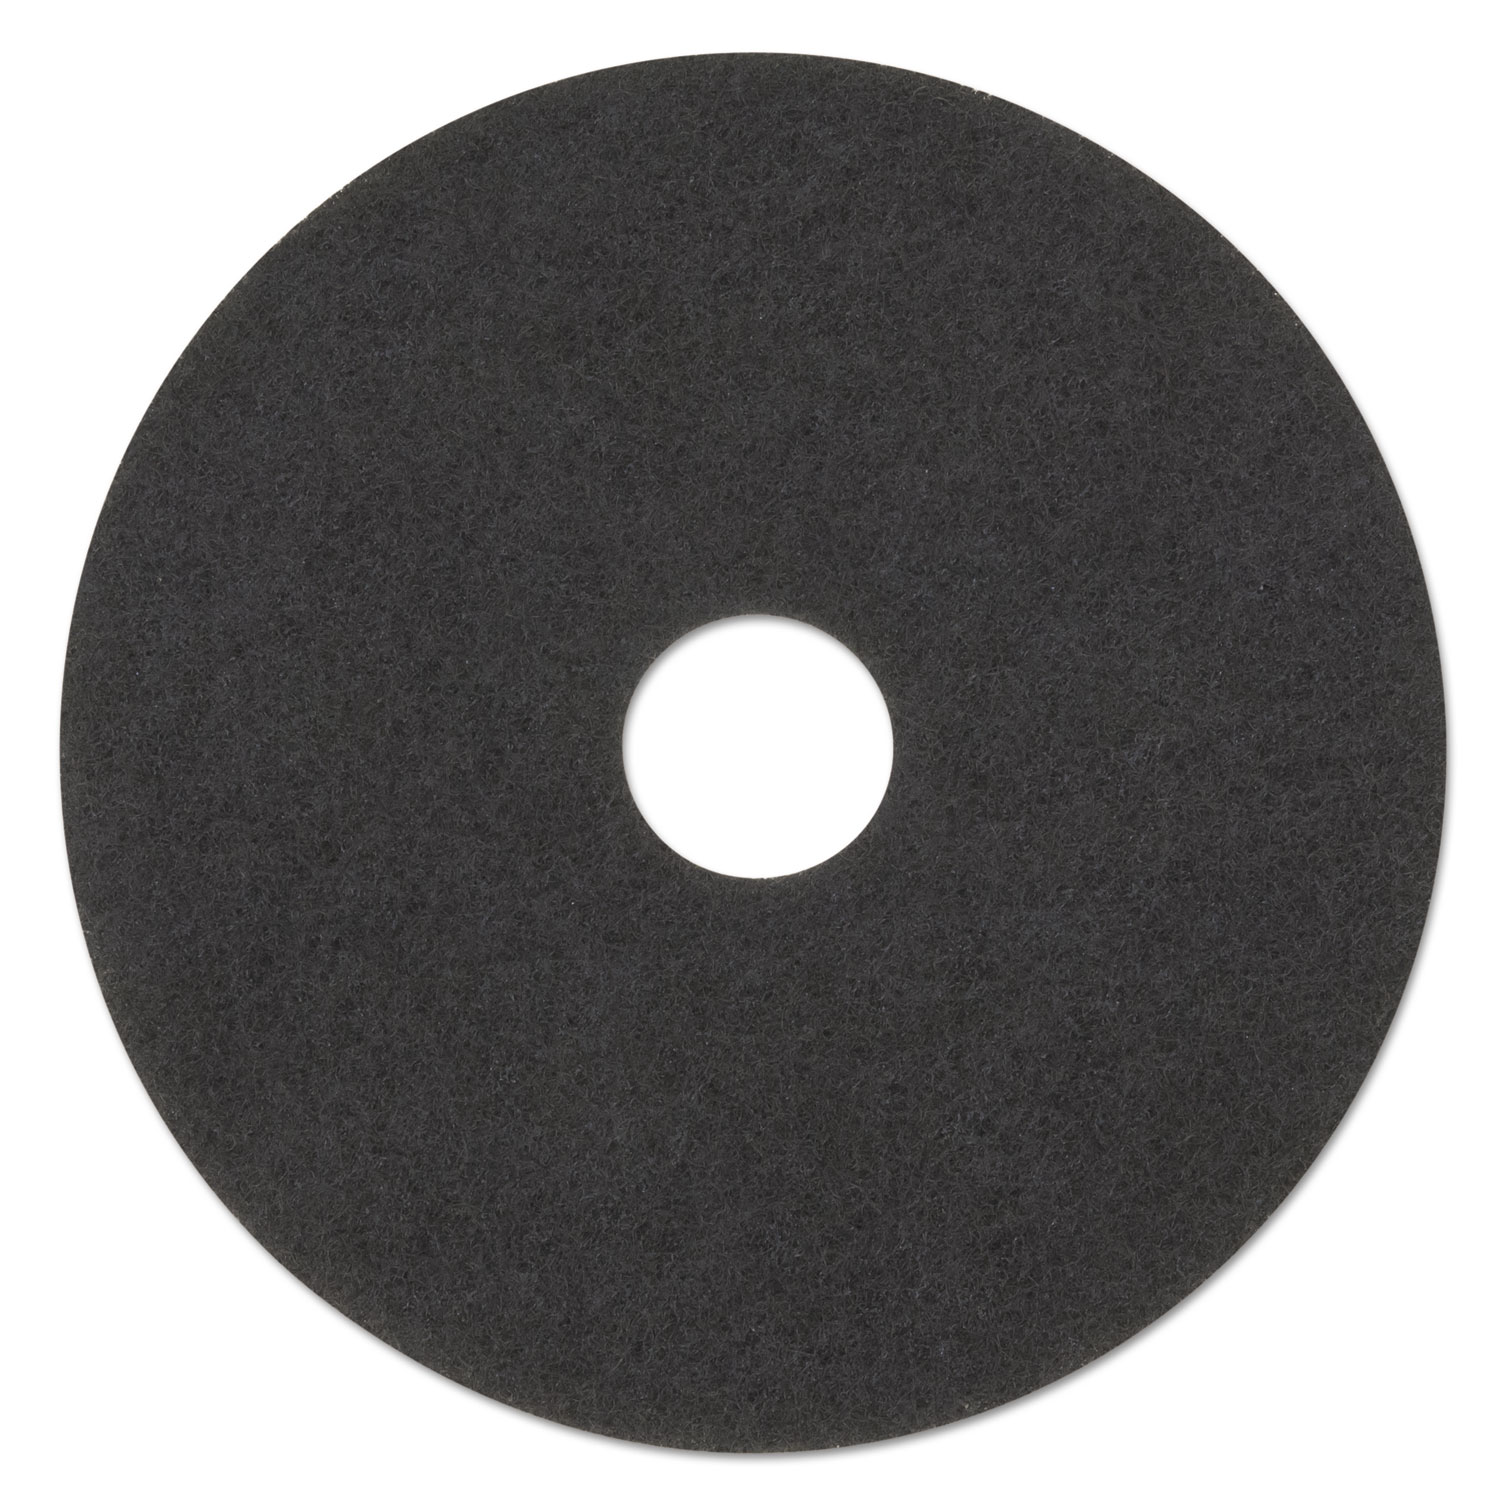 Low-Speed Stripper Floor Pad 7200, 23 Diameter, Black, 5/Carton